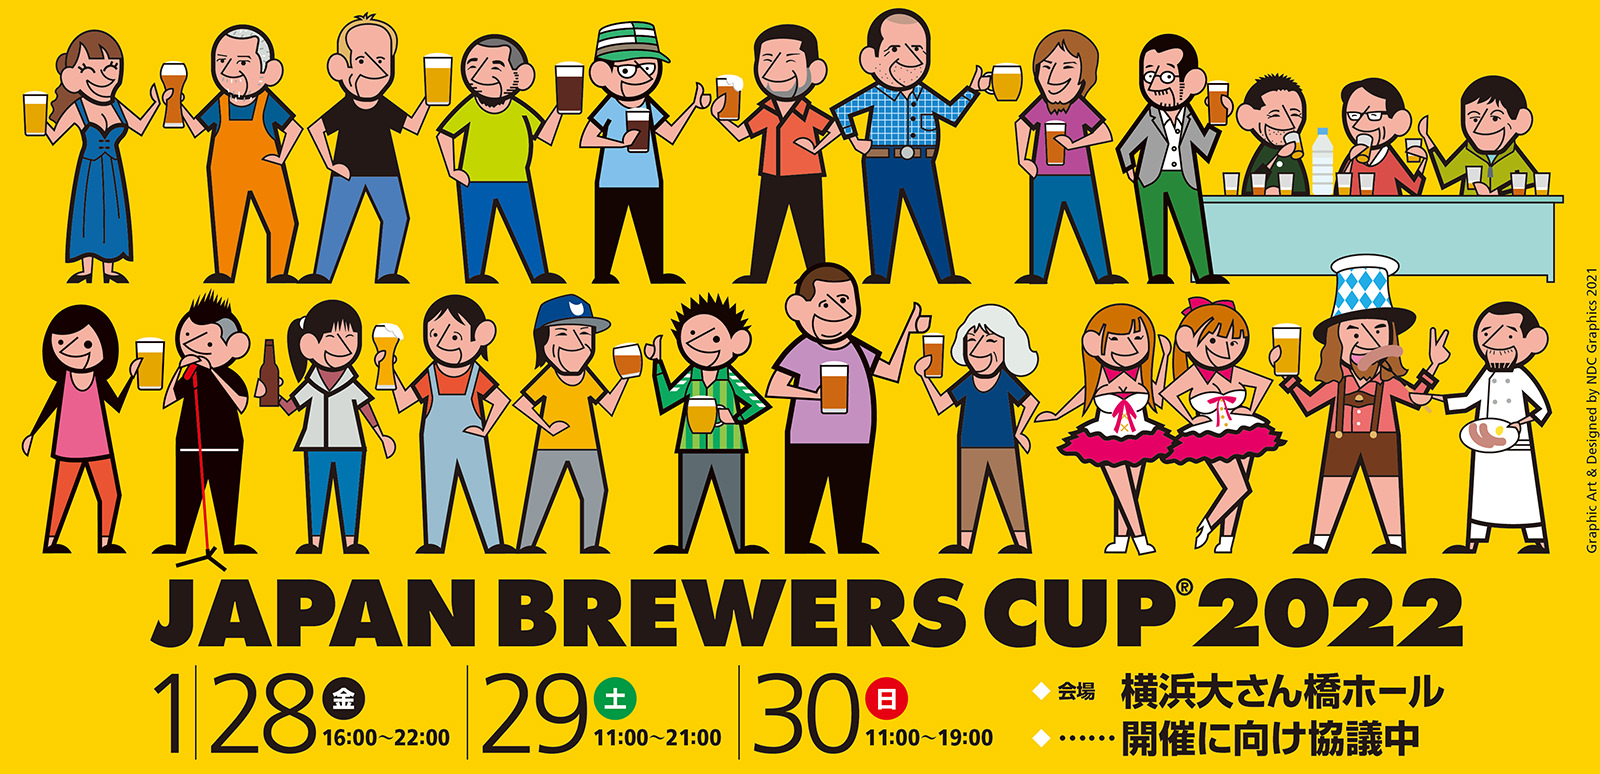 brewerscup2022-tokyo-japan-metropolis